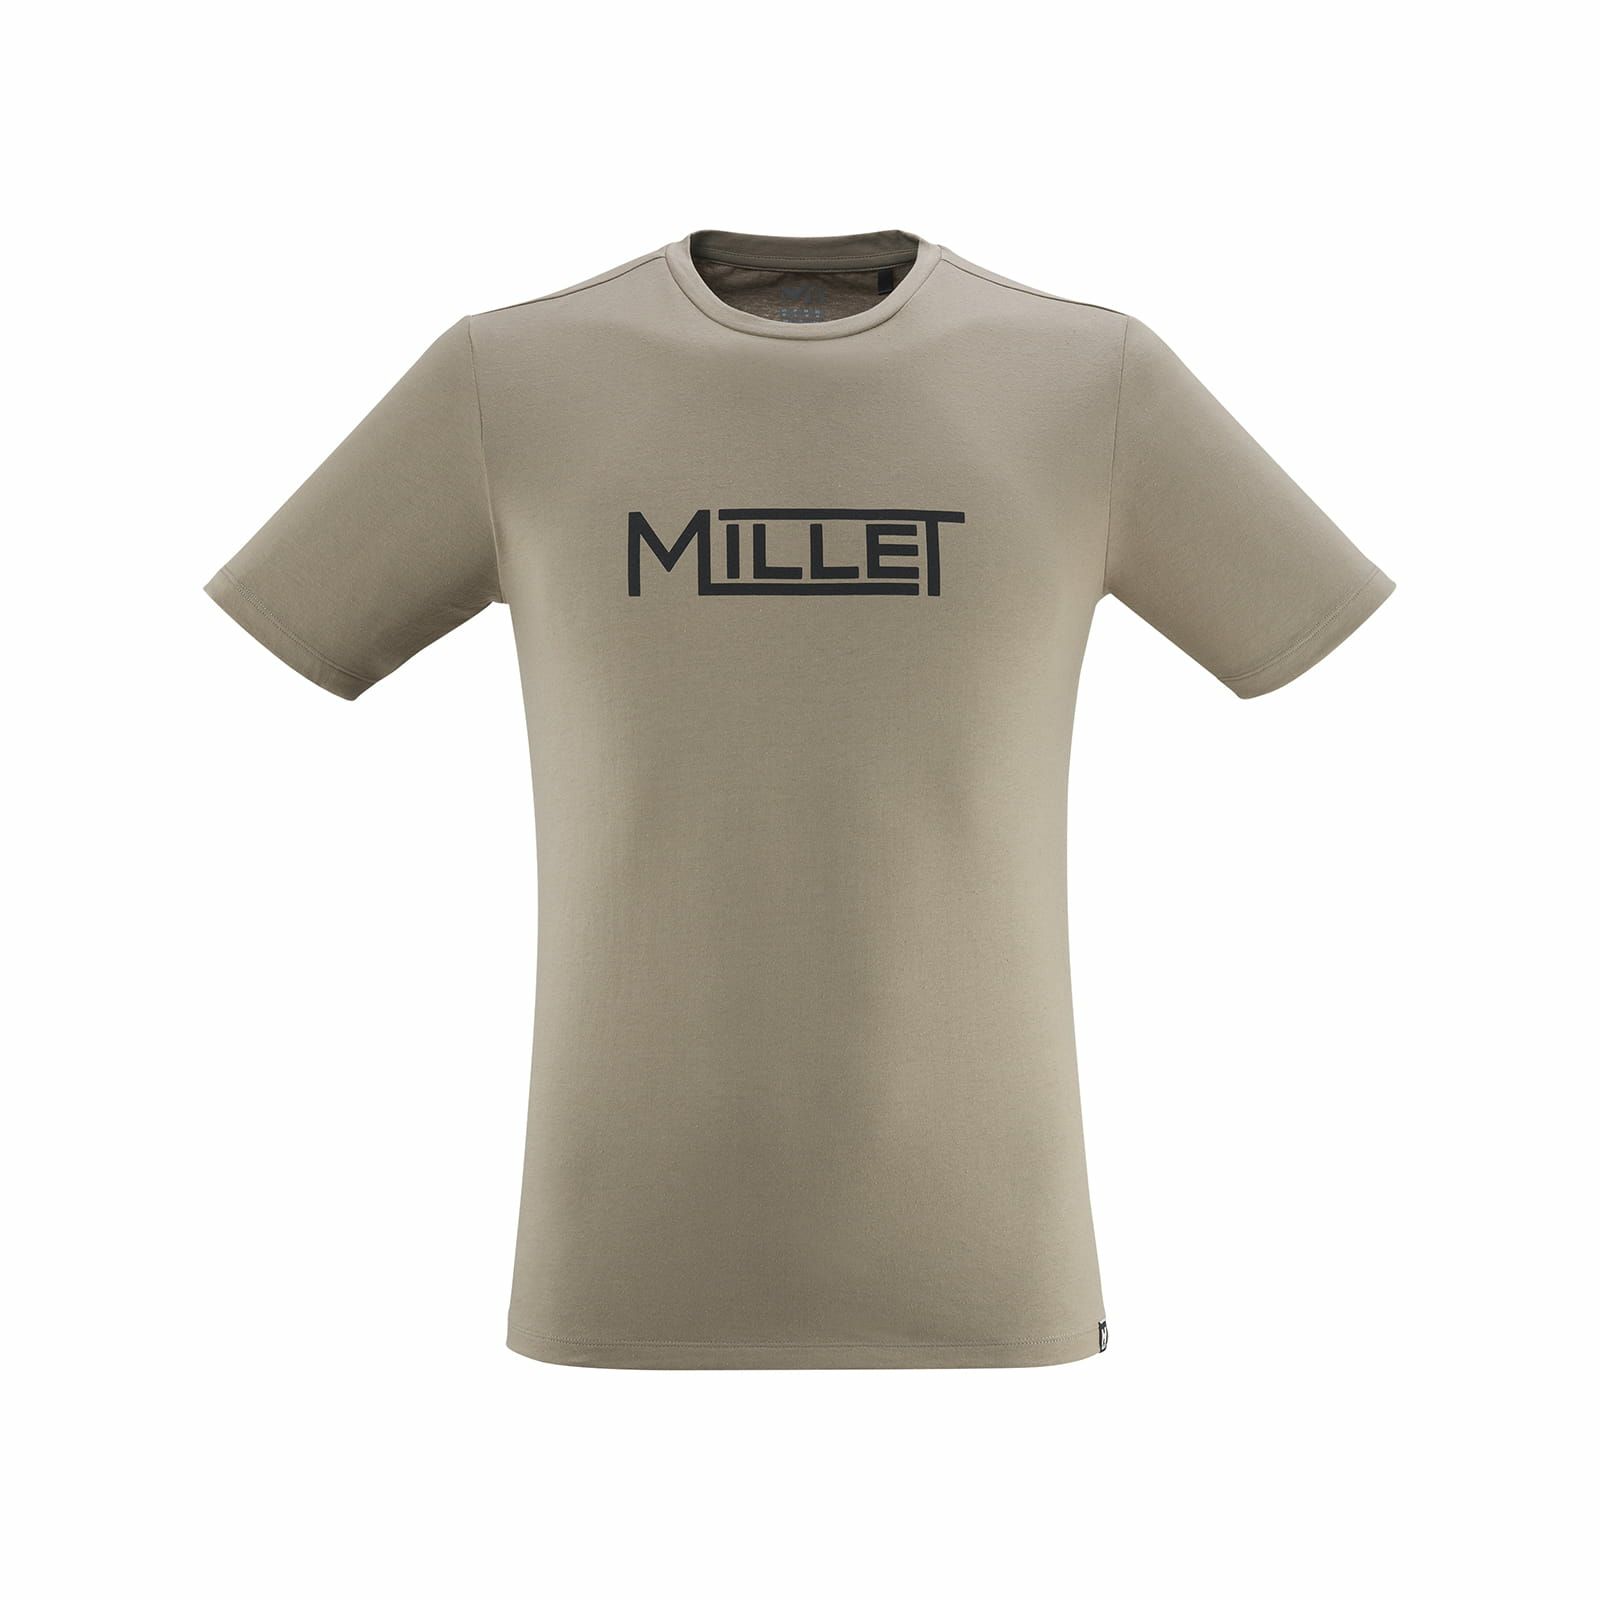 MILLET メンズ 半袖Tシャツ 半袖シャツ クライミング シマイ プリント Tシャツ ショートスリーブ MIV10089